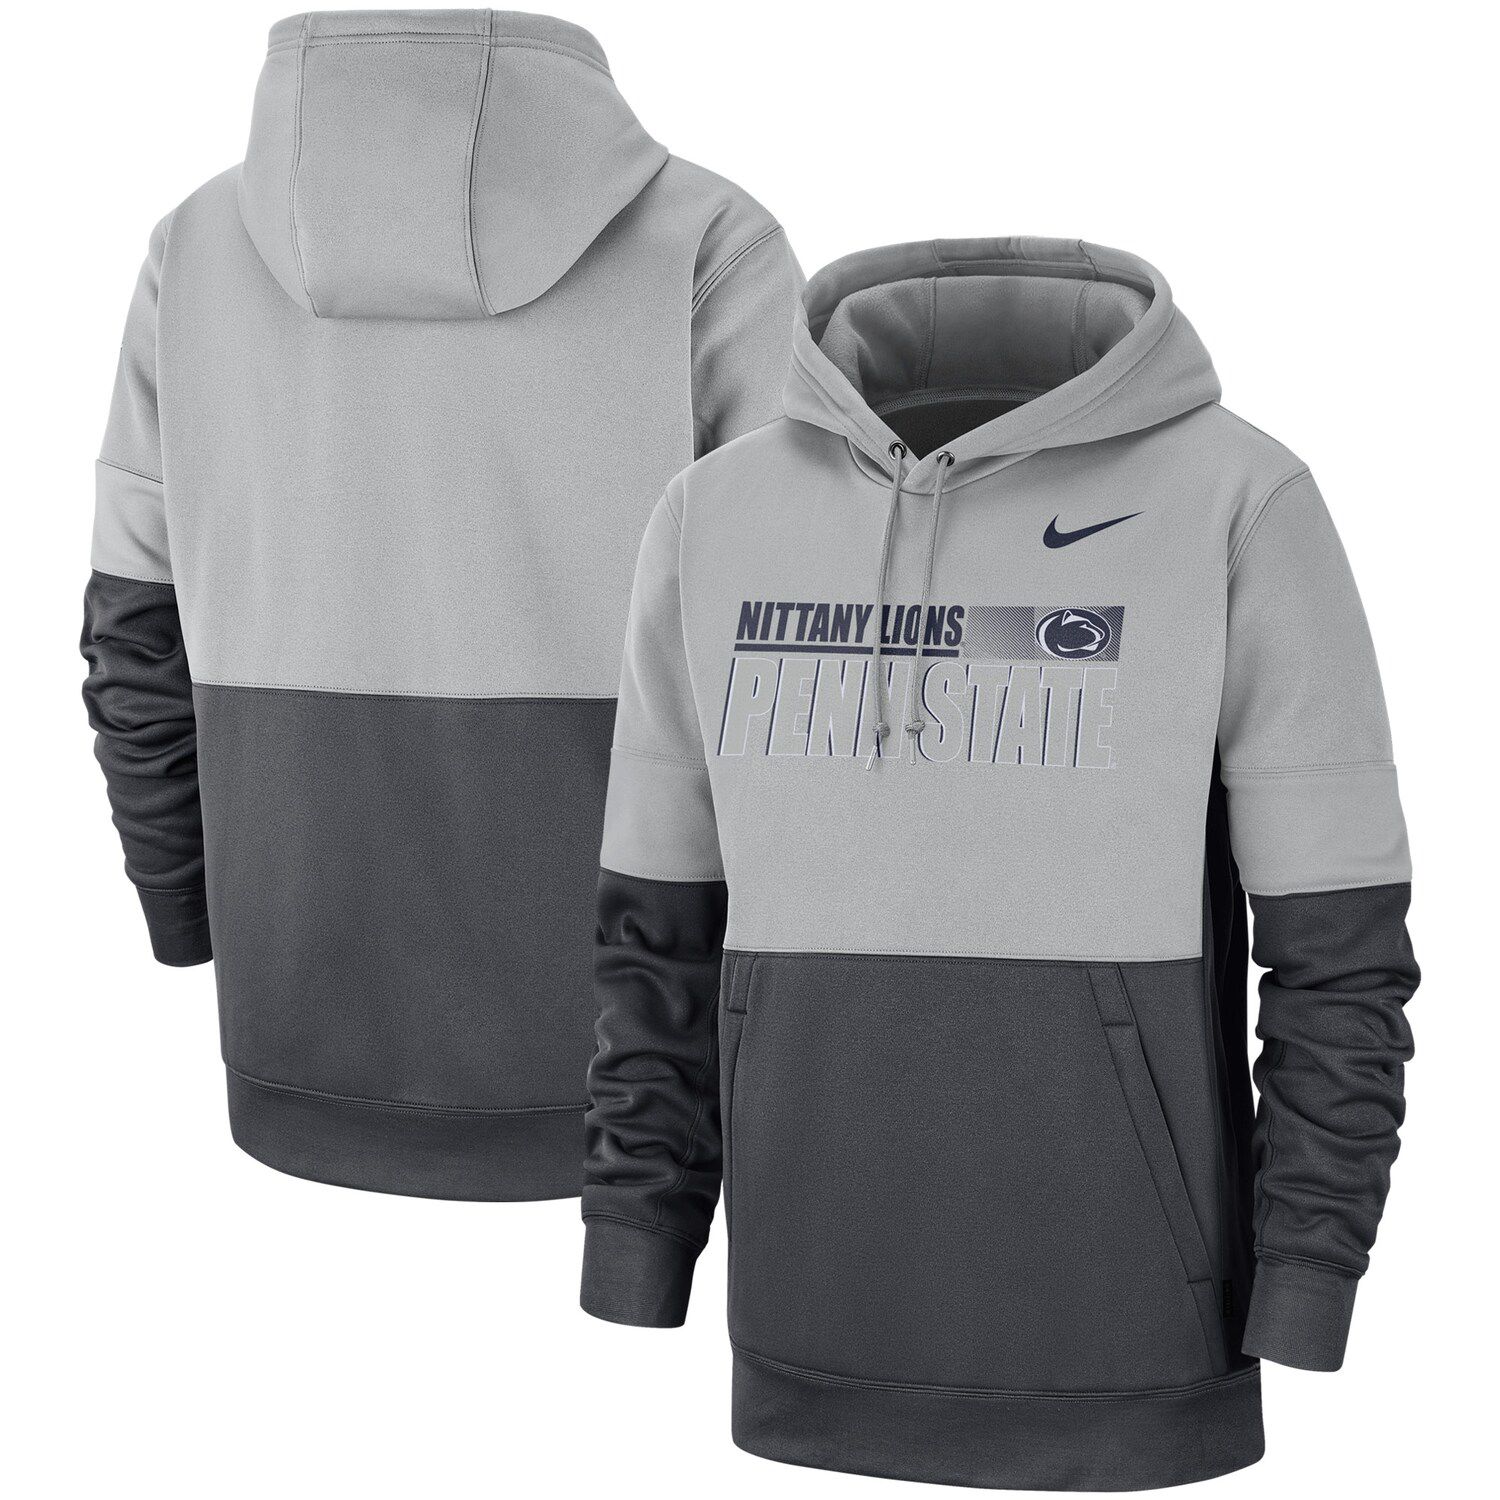 Men's Nike Gray/Anthracite Penn State 